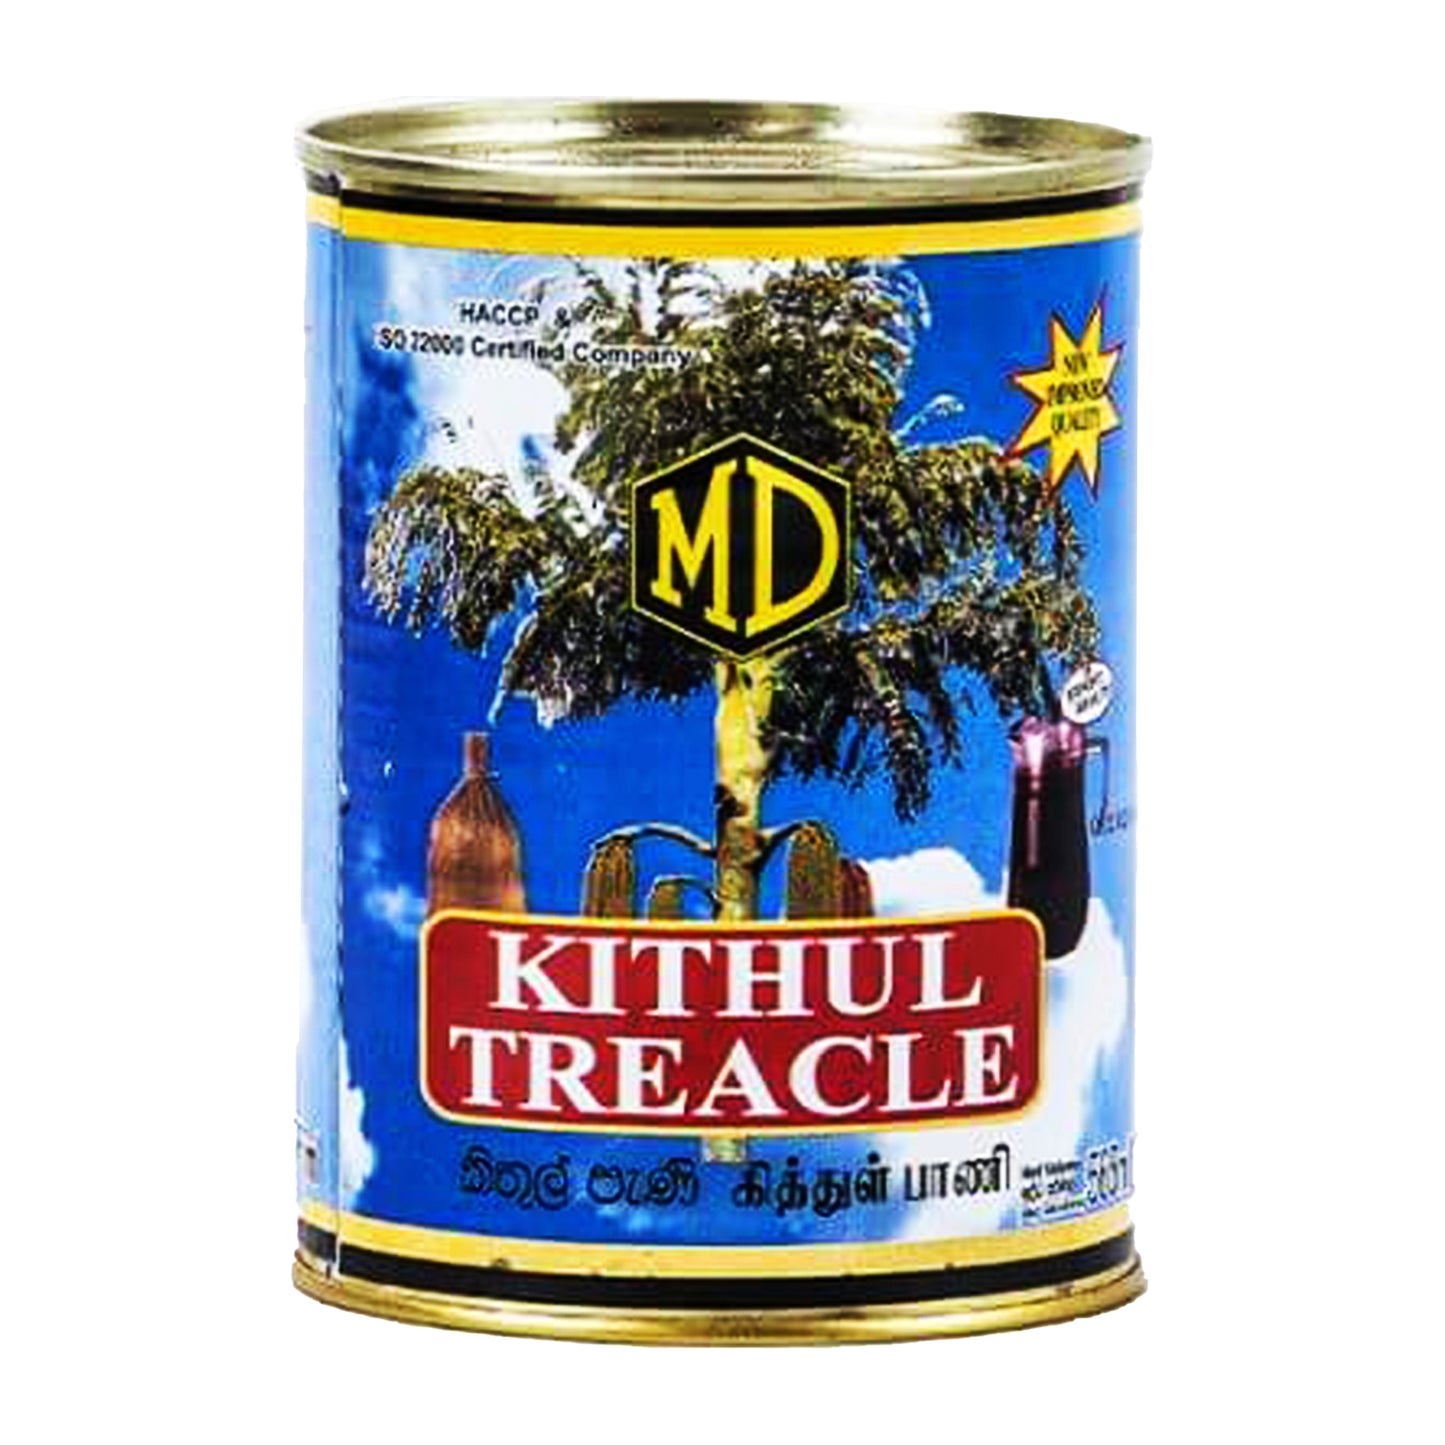 MD Kithul Treacle